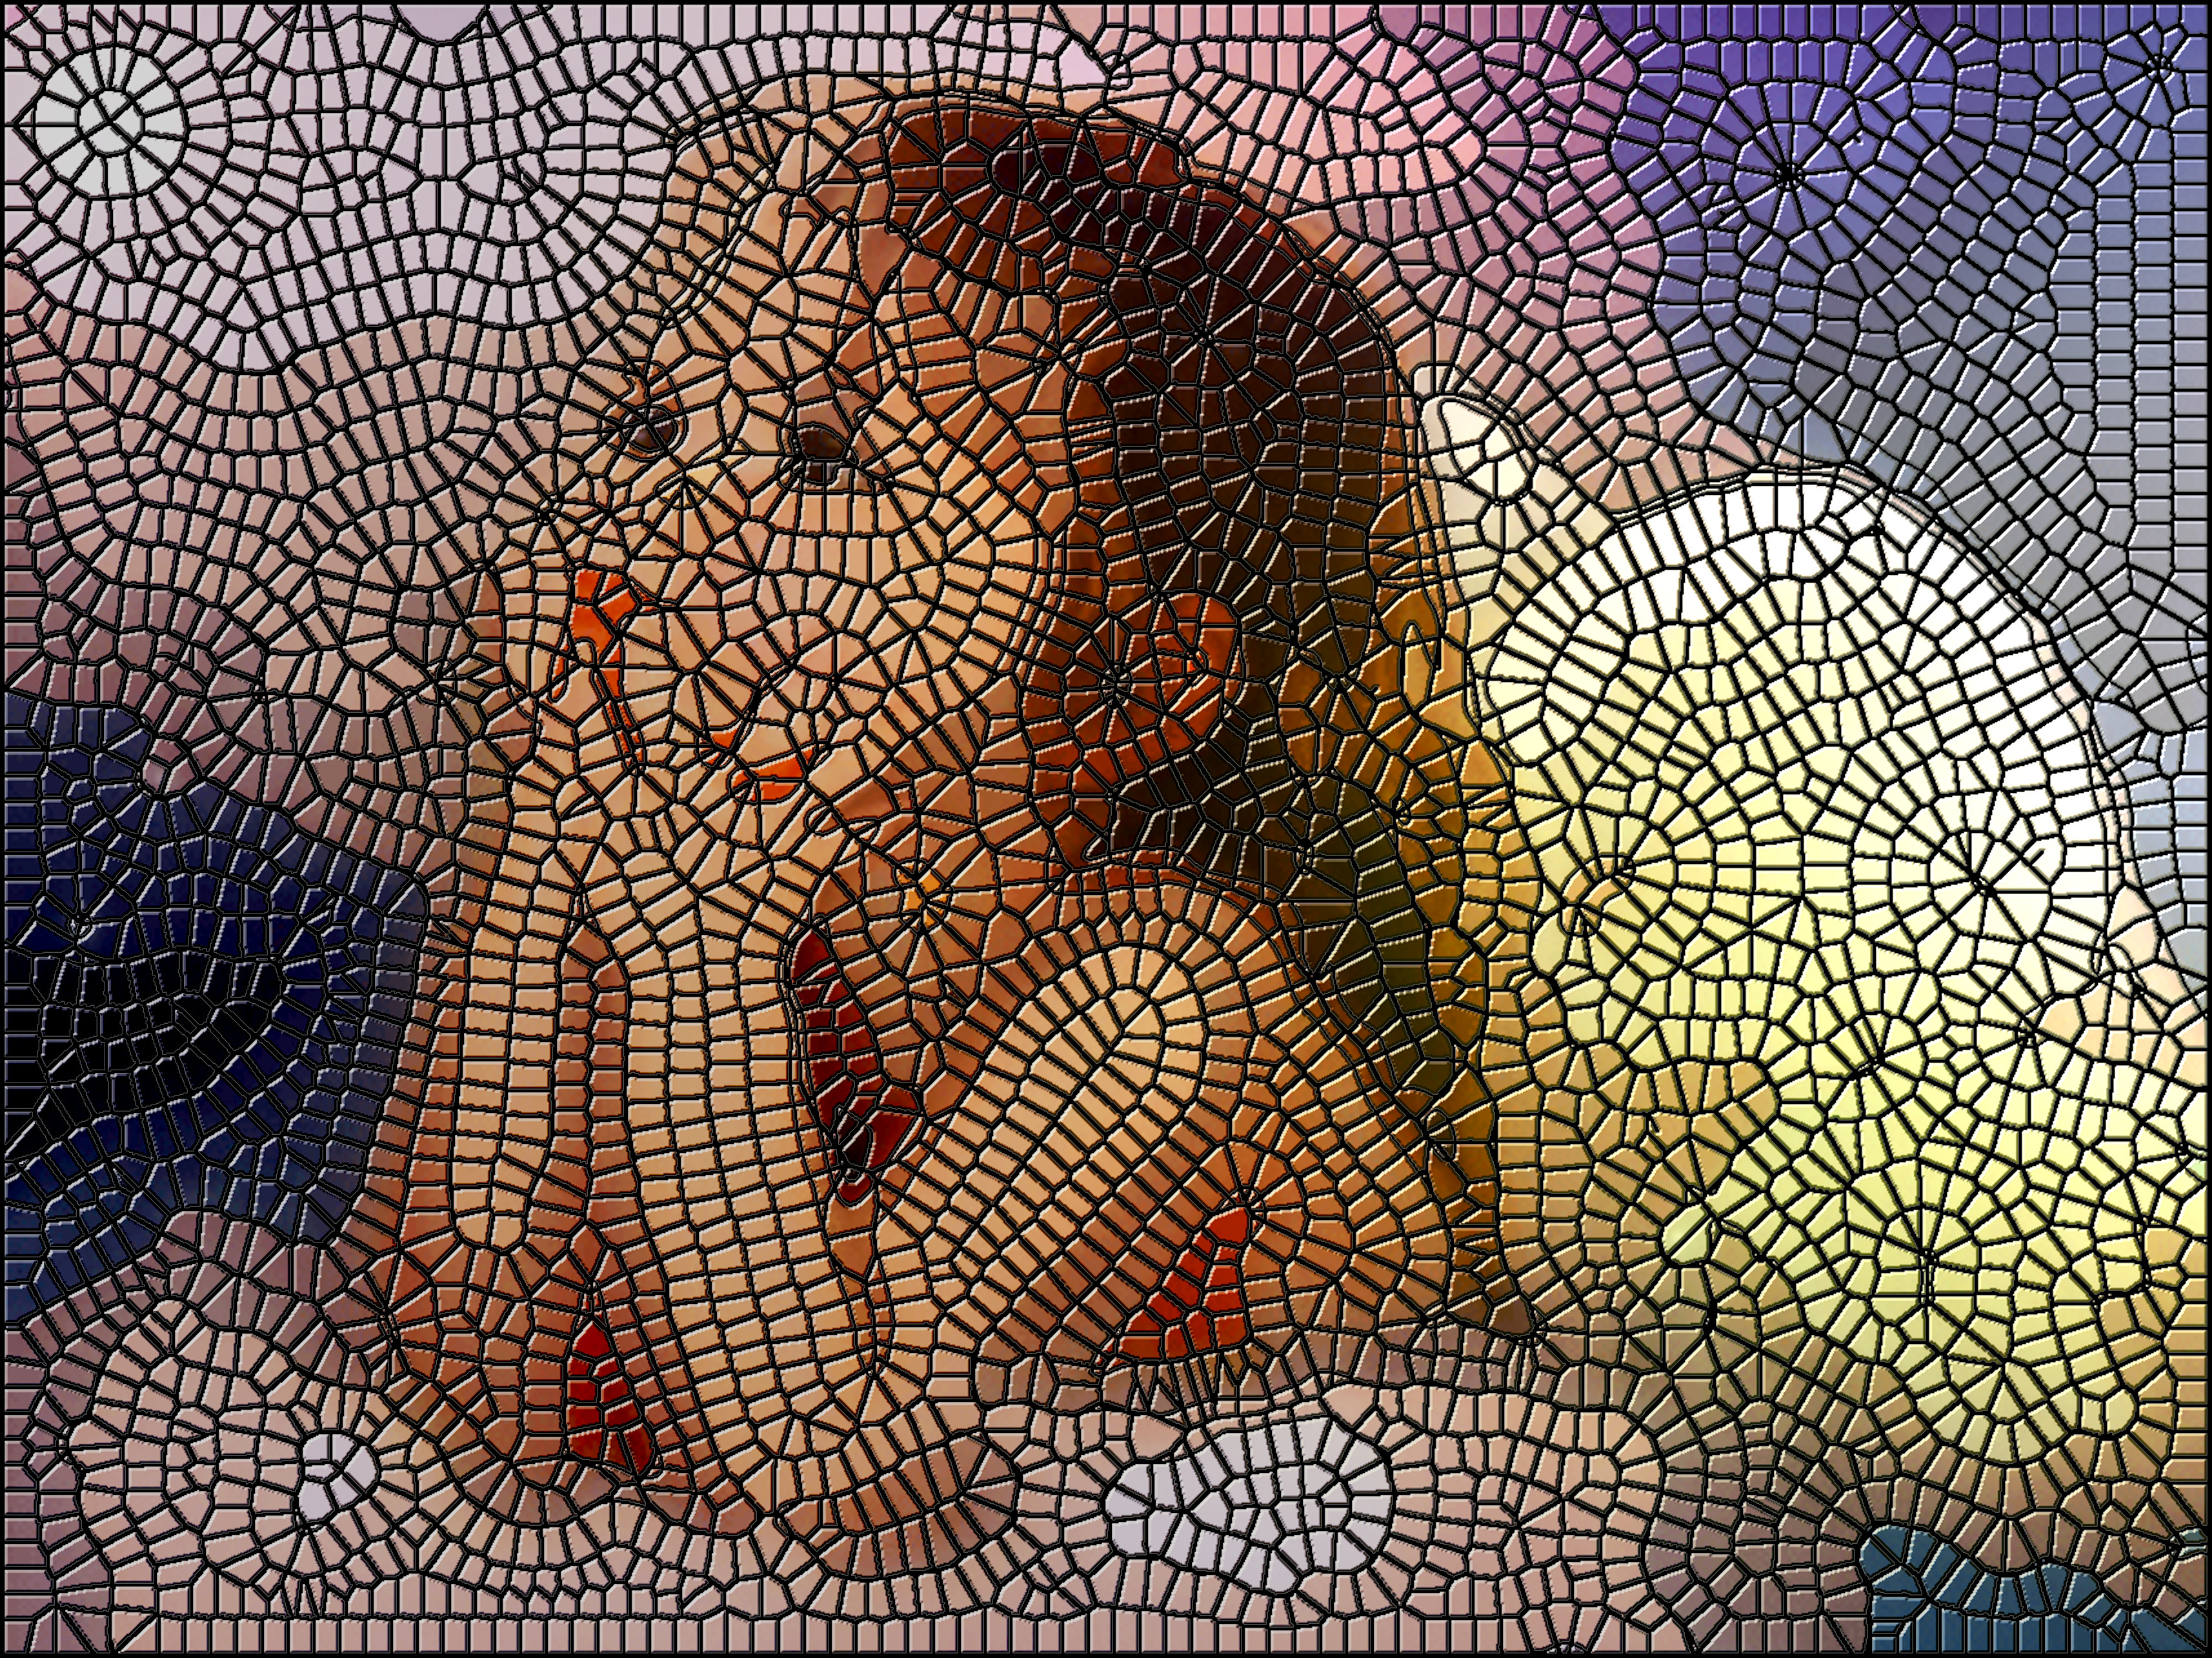 2020-04-13 11-48-58 angioletta, as a Mosaic Roman style, with an optional light effect.jpg